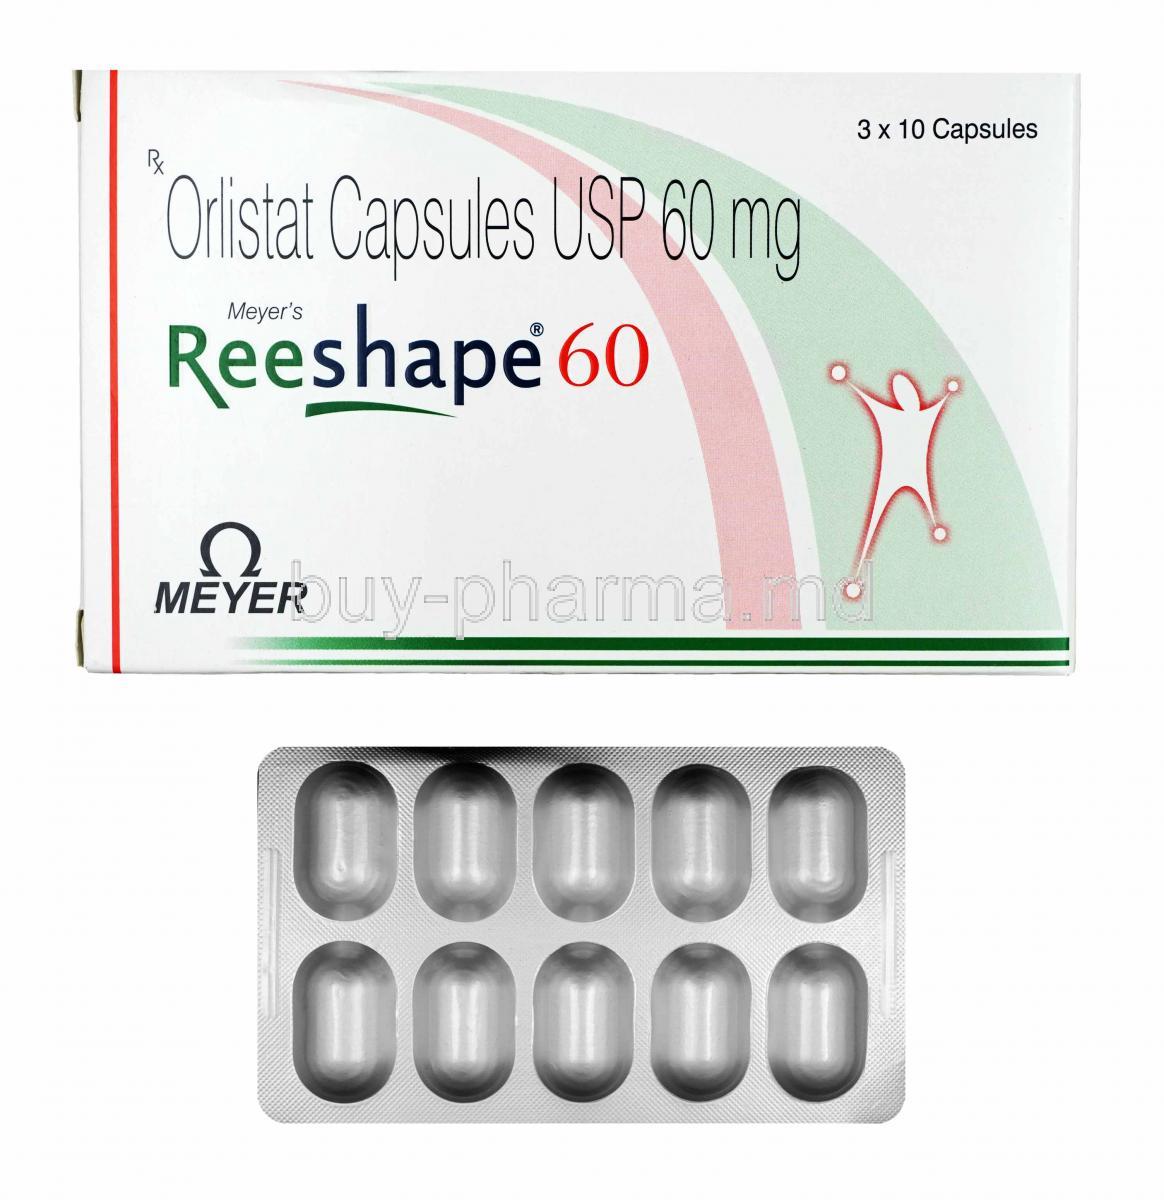 Reeshape, Orlistat 60mg box and capsules